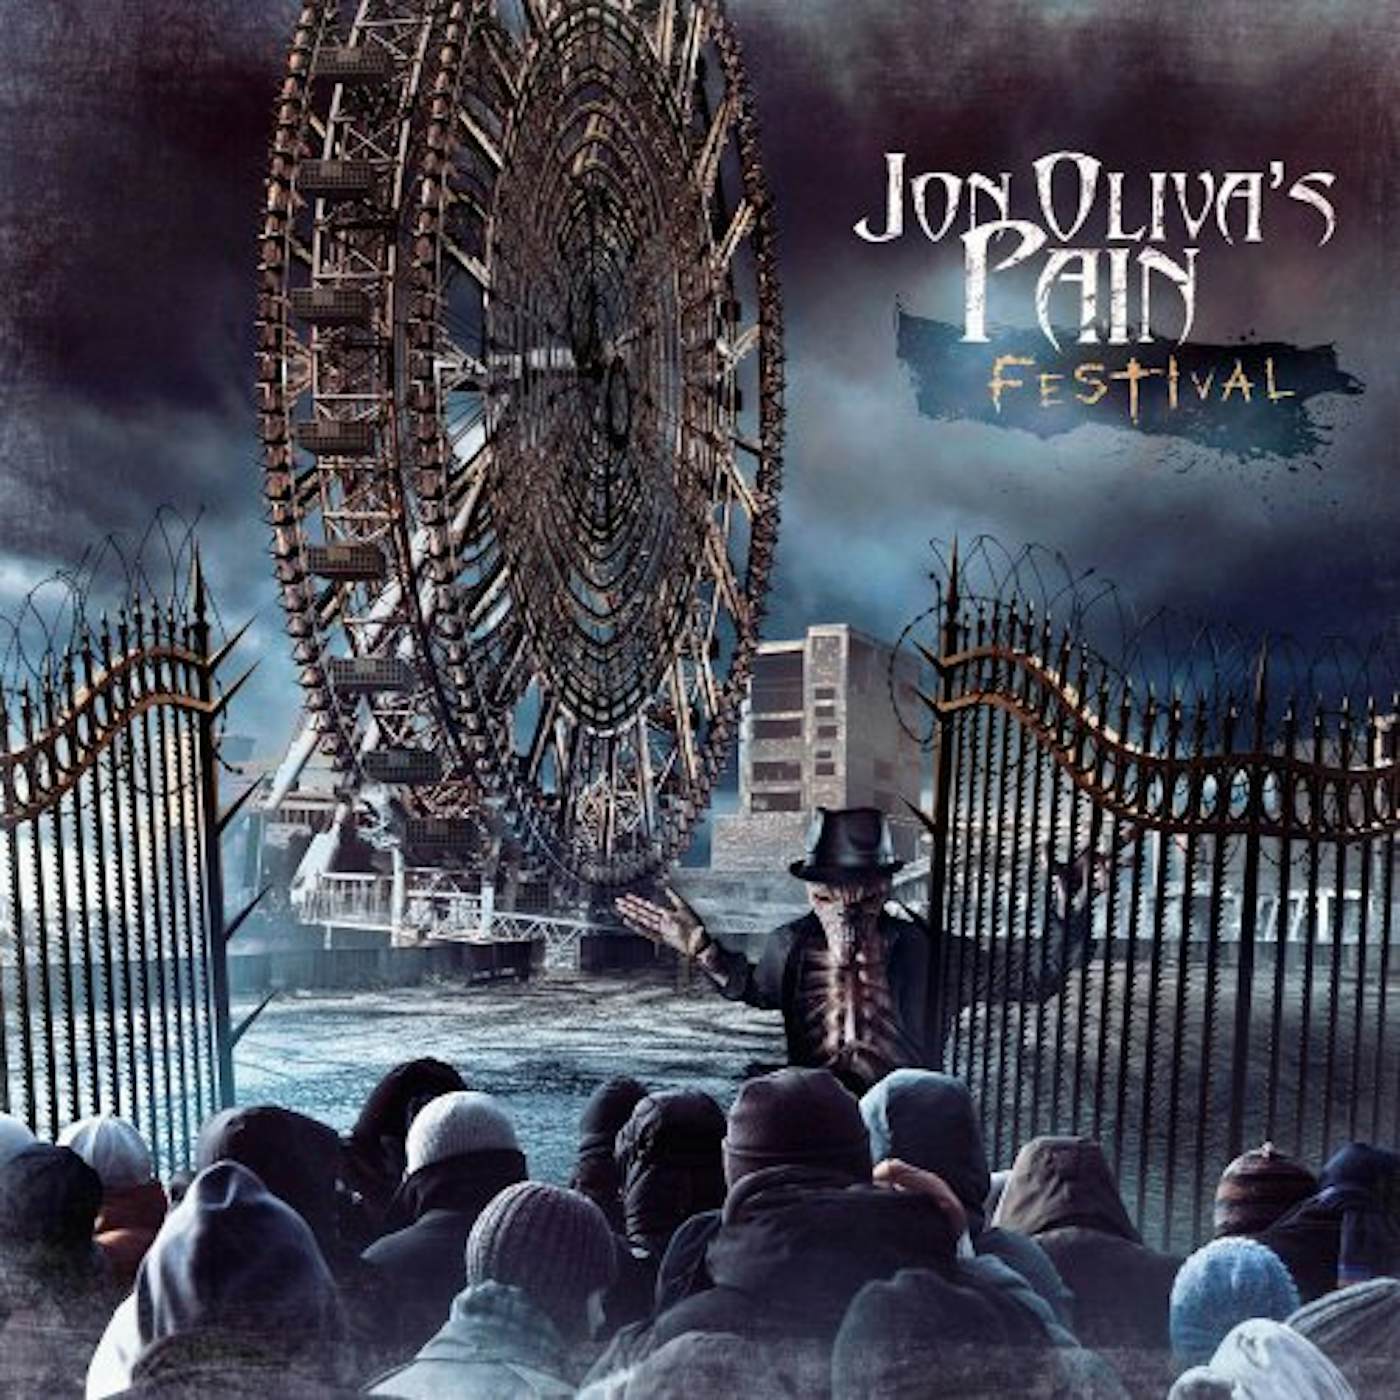 Jon Oliva`s Pain FESTIVAL CD